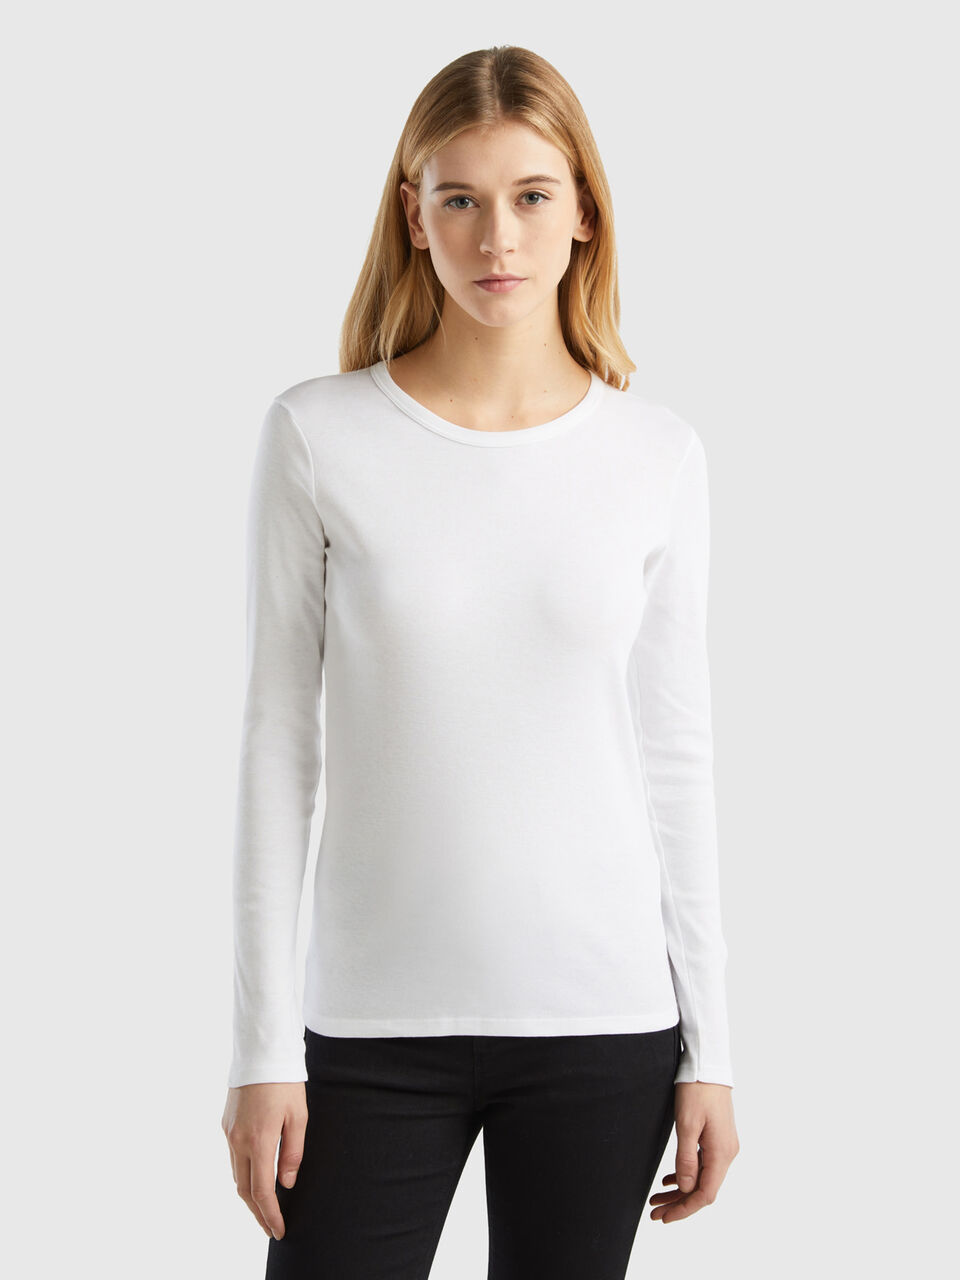 Buy Women White Solid Long Sleeves Shirt Online - 734828